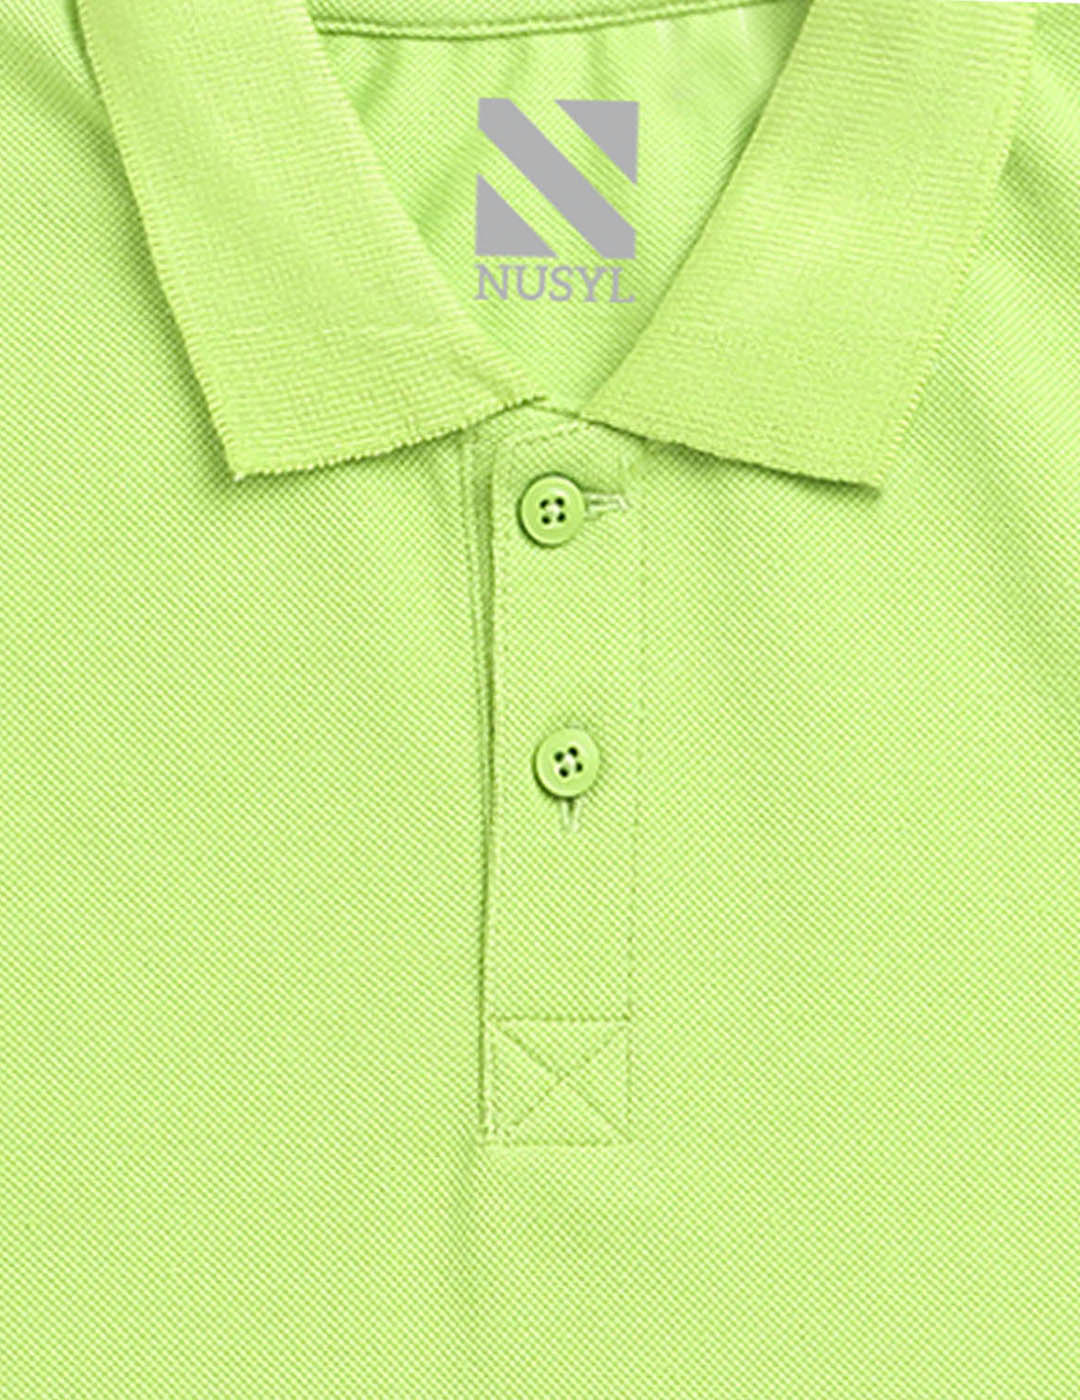 Nusyl Cars Printed Lime green Boys polo T-shirts